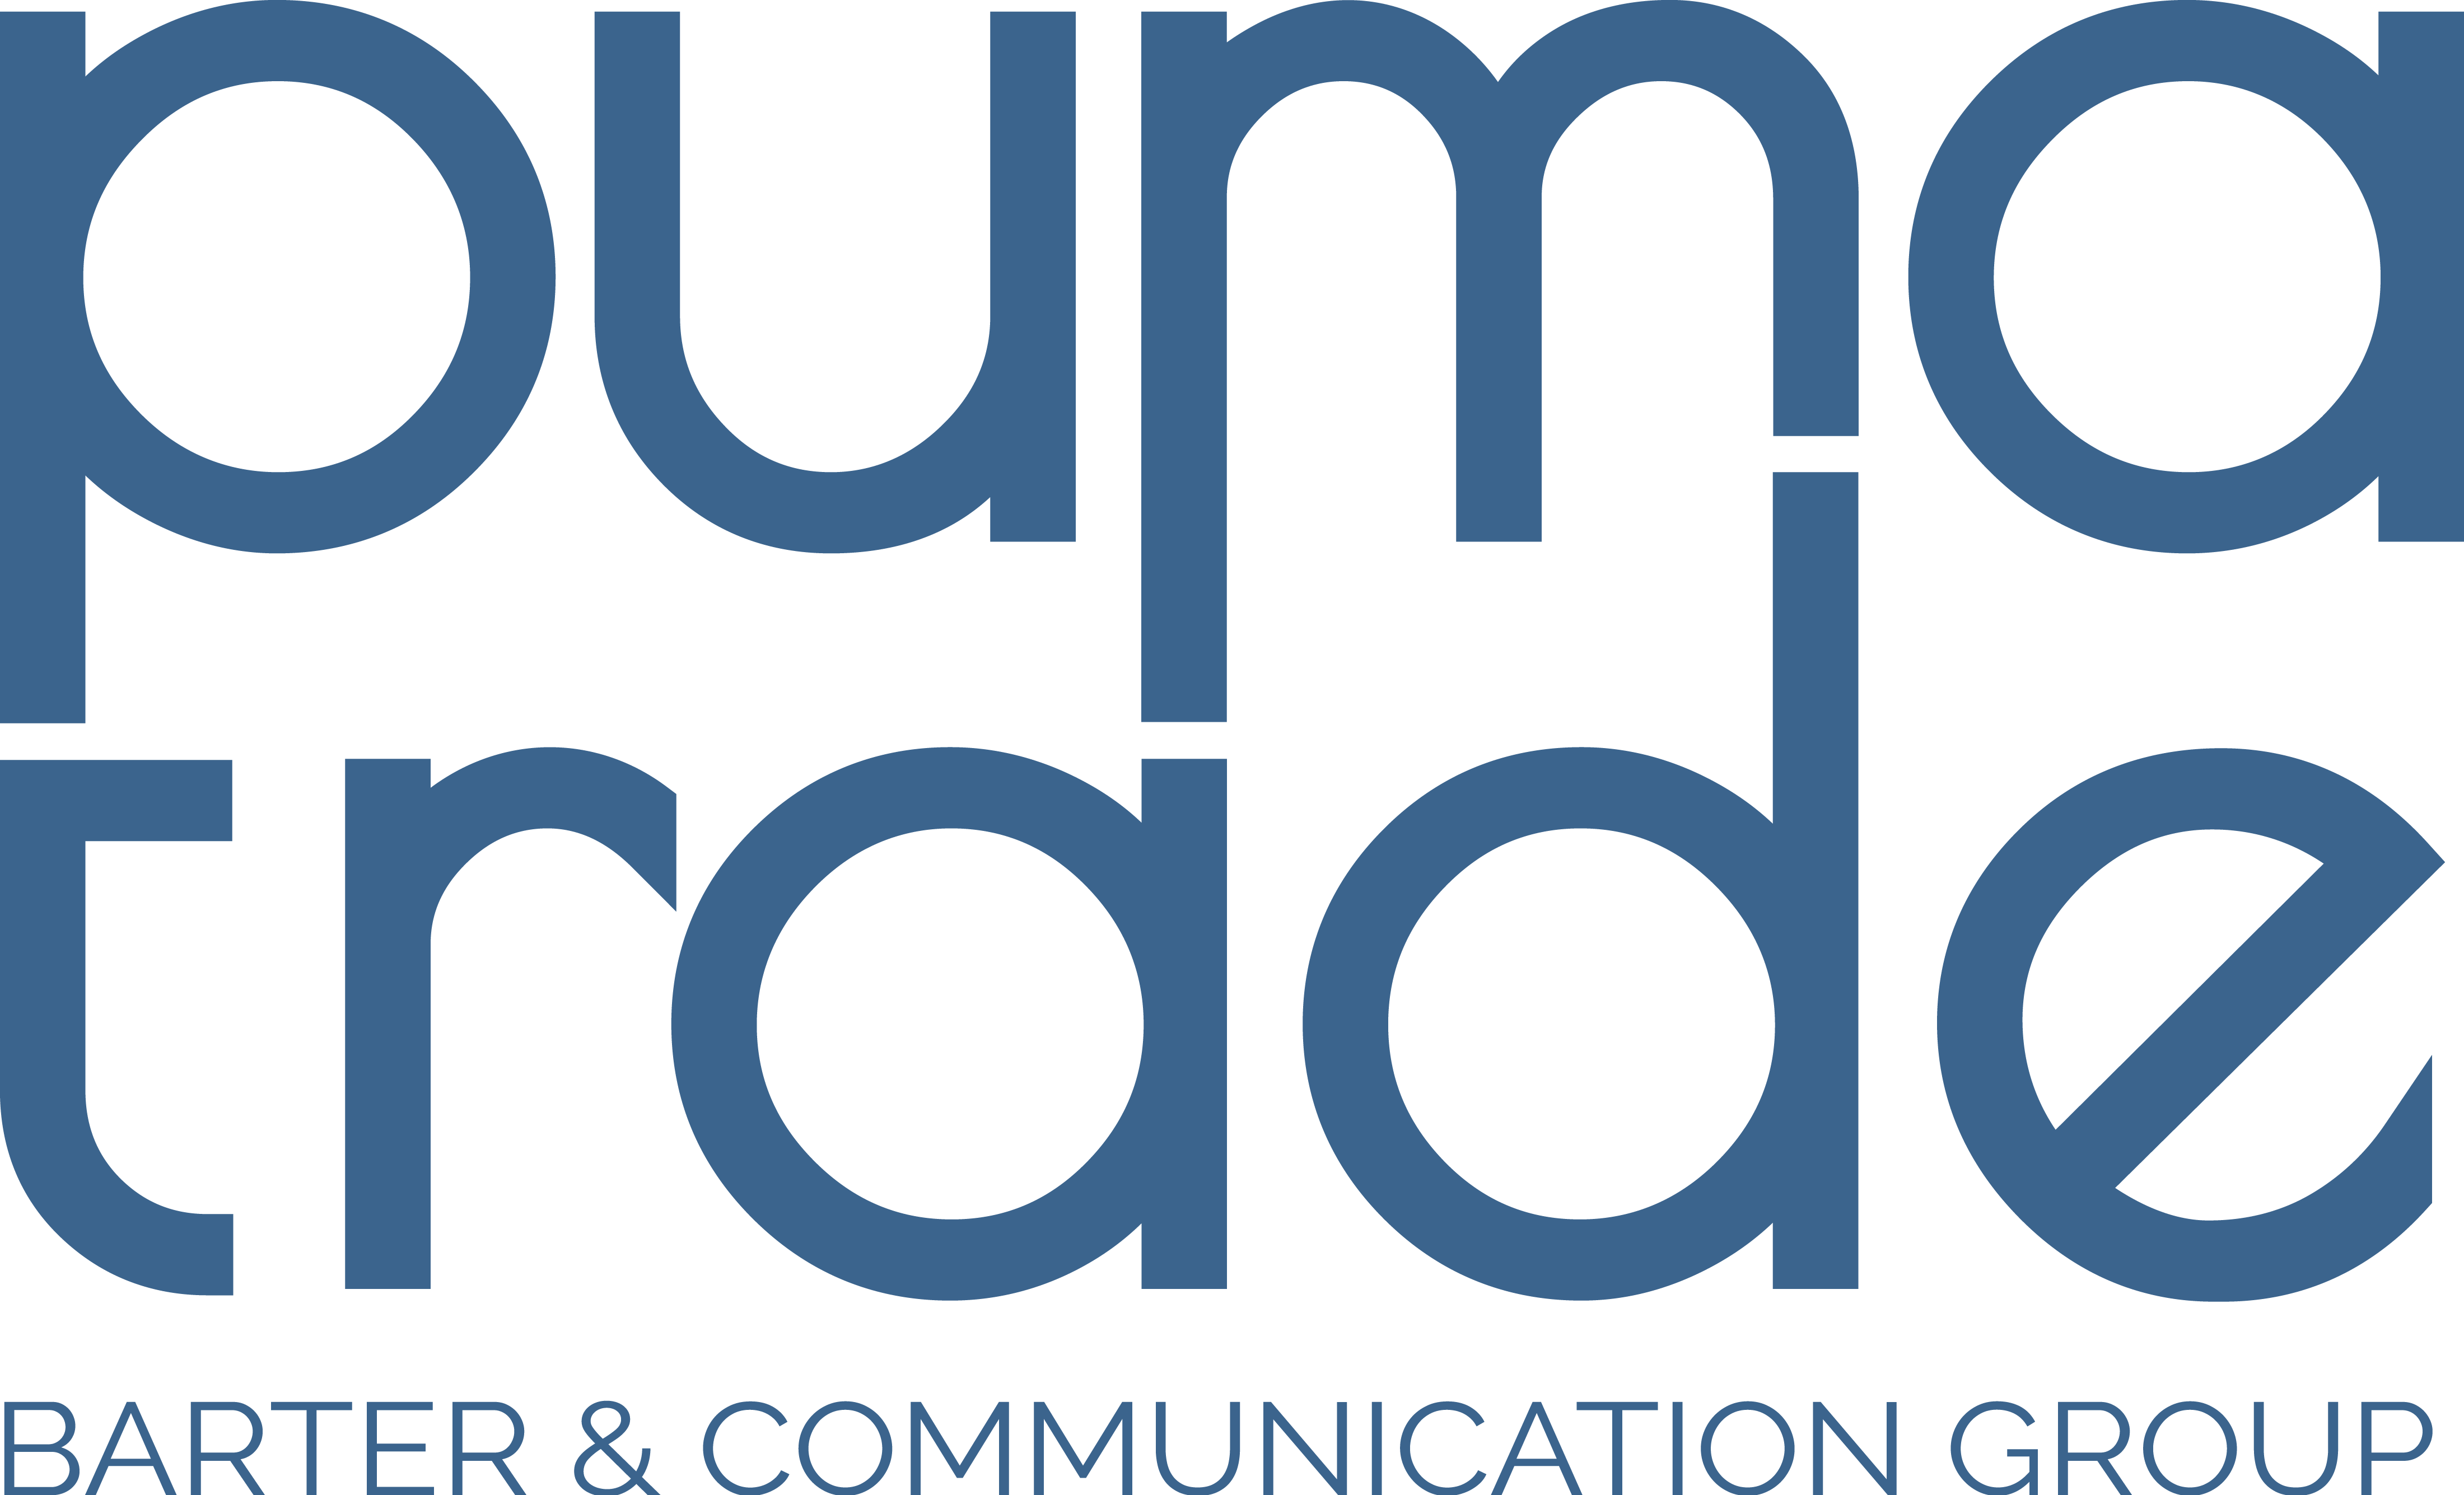 Pumatrade | Barter & Communication Group